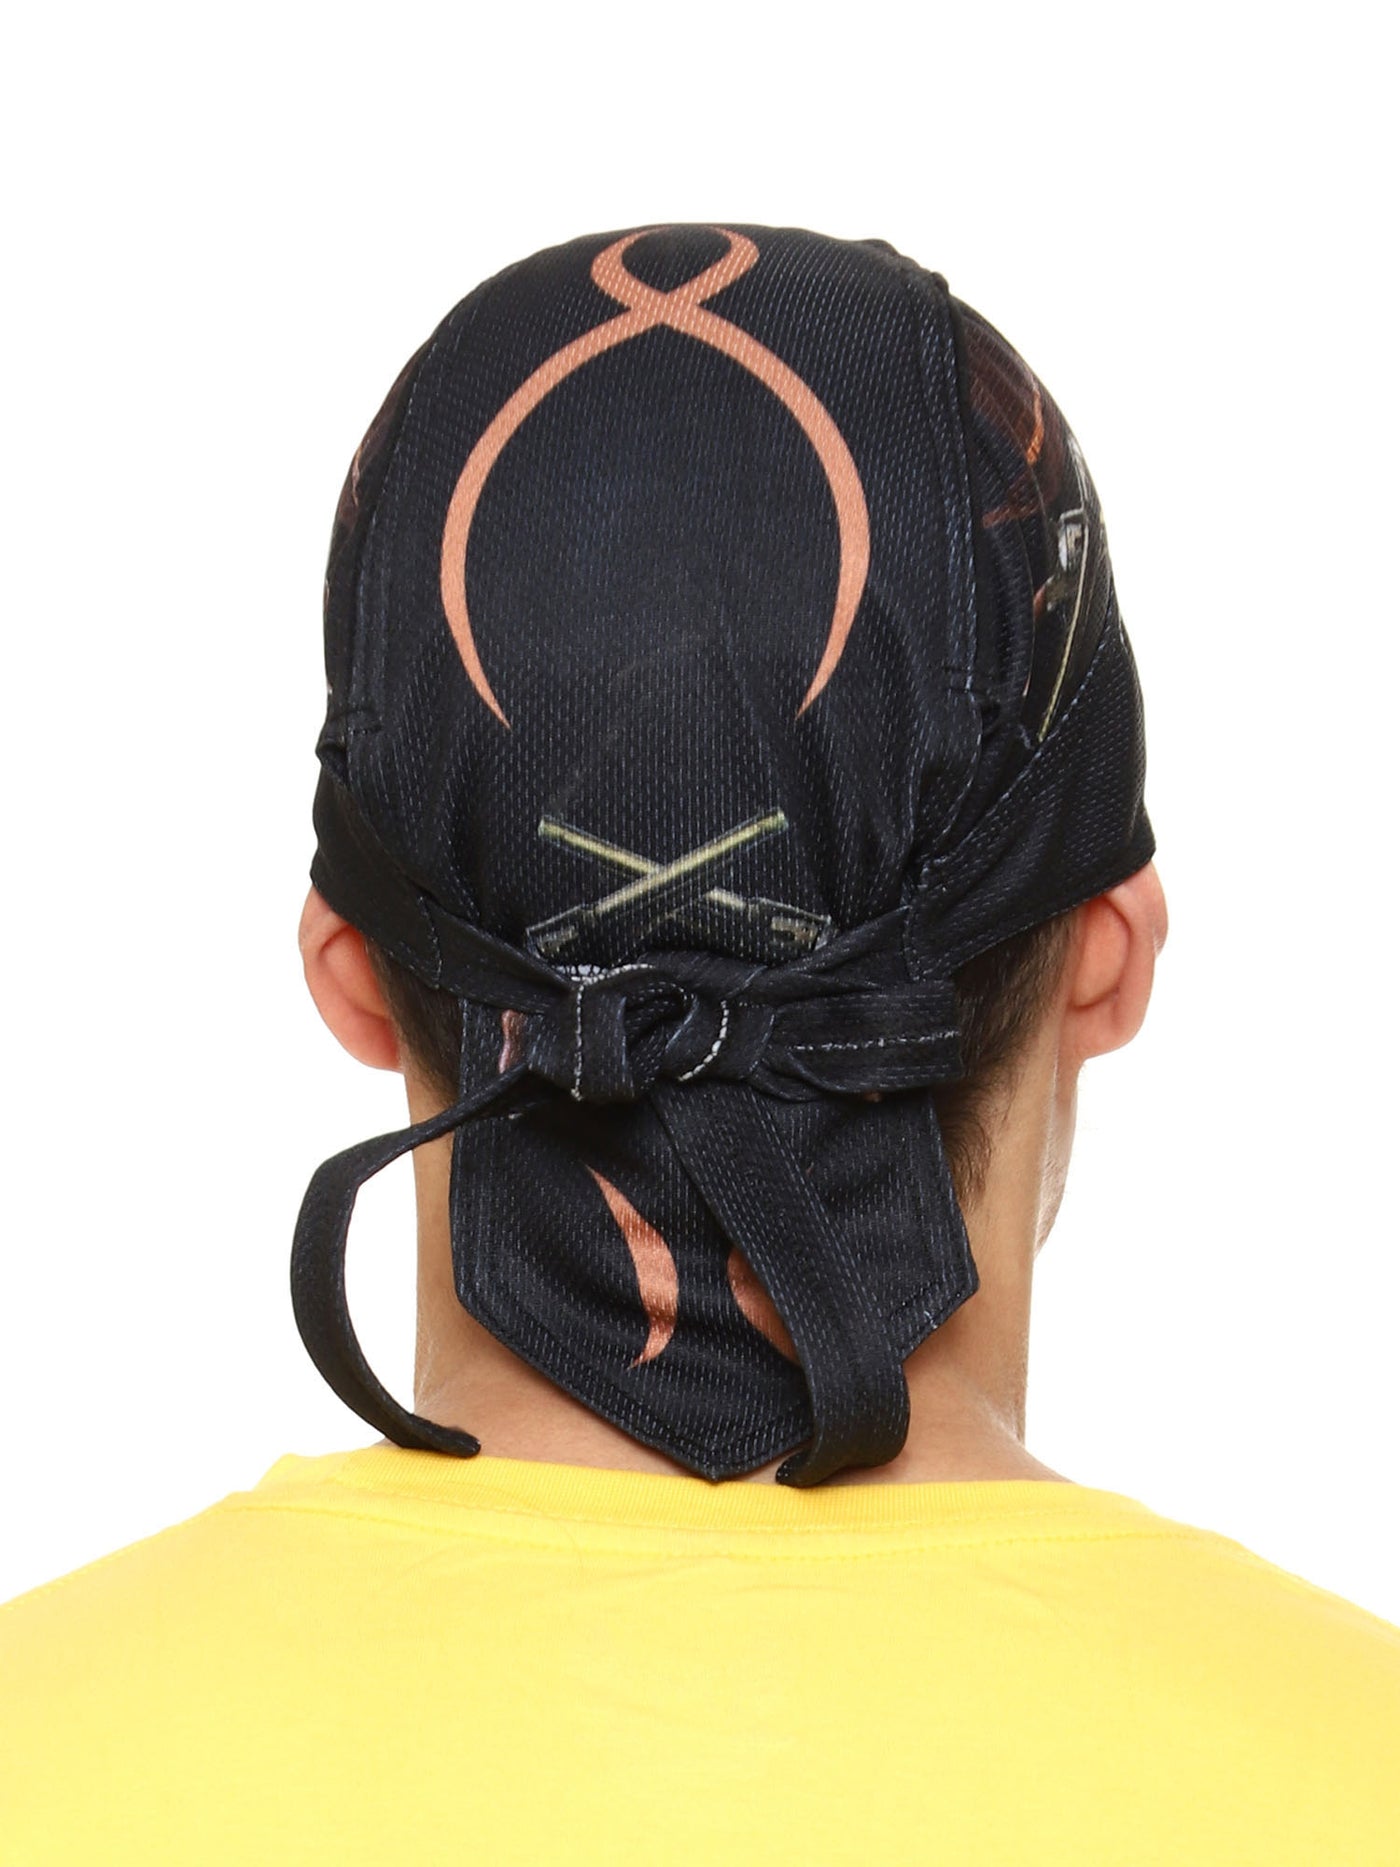 Best Bandanas,Headwraps,Headgear,Biker T shirts for Men and Women in India helmet liner,hair protection,durag